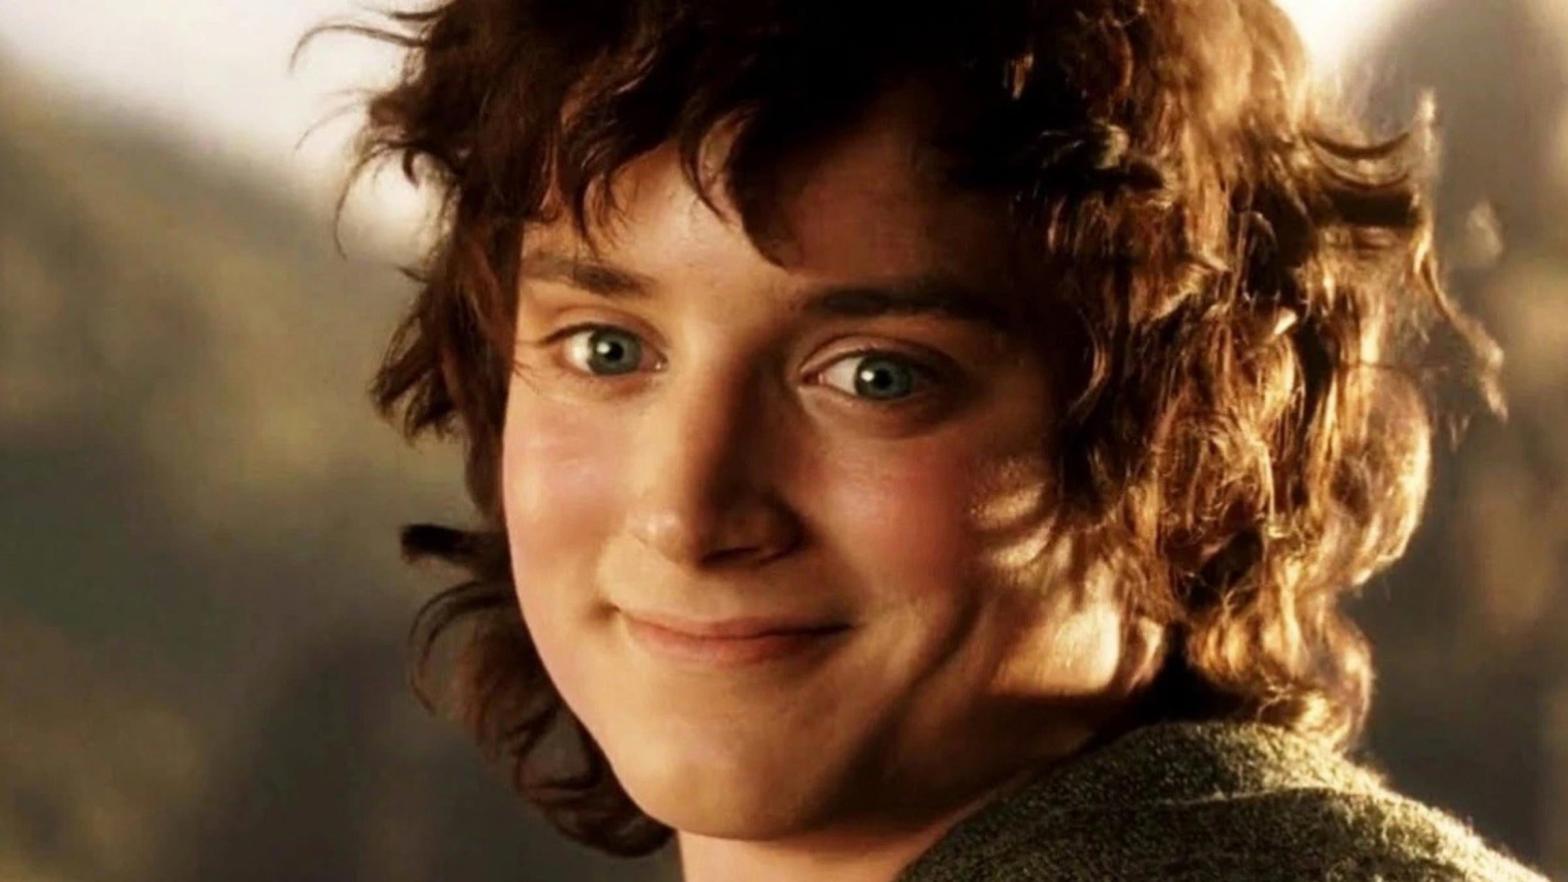 Frodo Baggins himself, Elijah Wood, is pragmatic about the new Lord of the Rings movies. (Image: Warner Bros.)